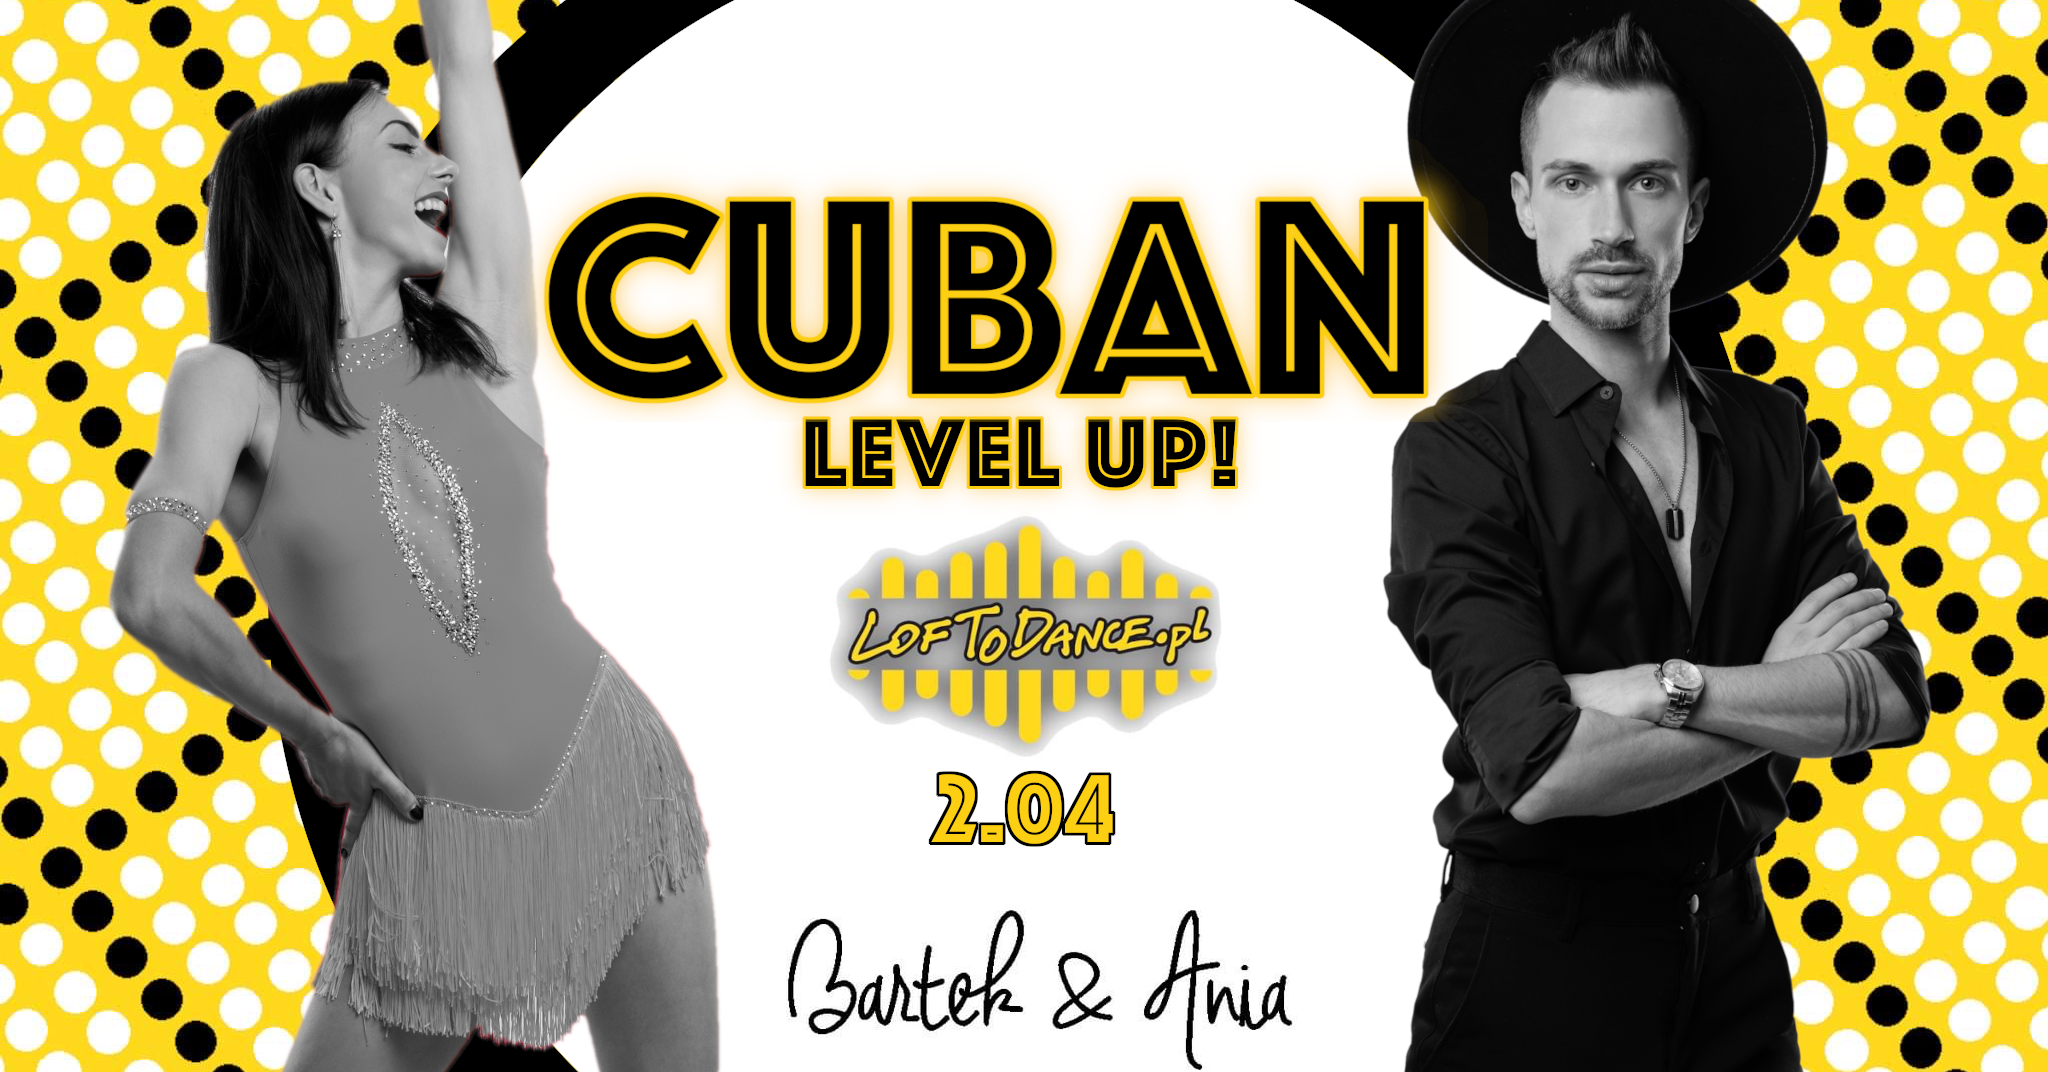 LEVEL UP! 4 - Cuban Edition